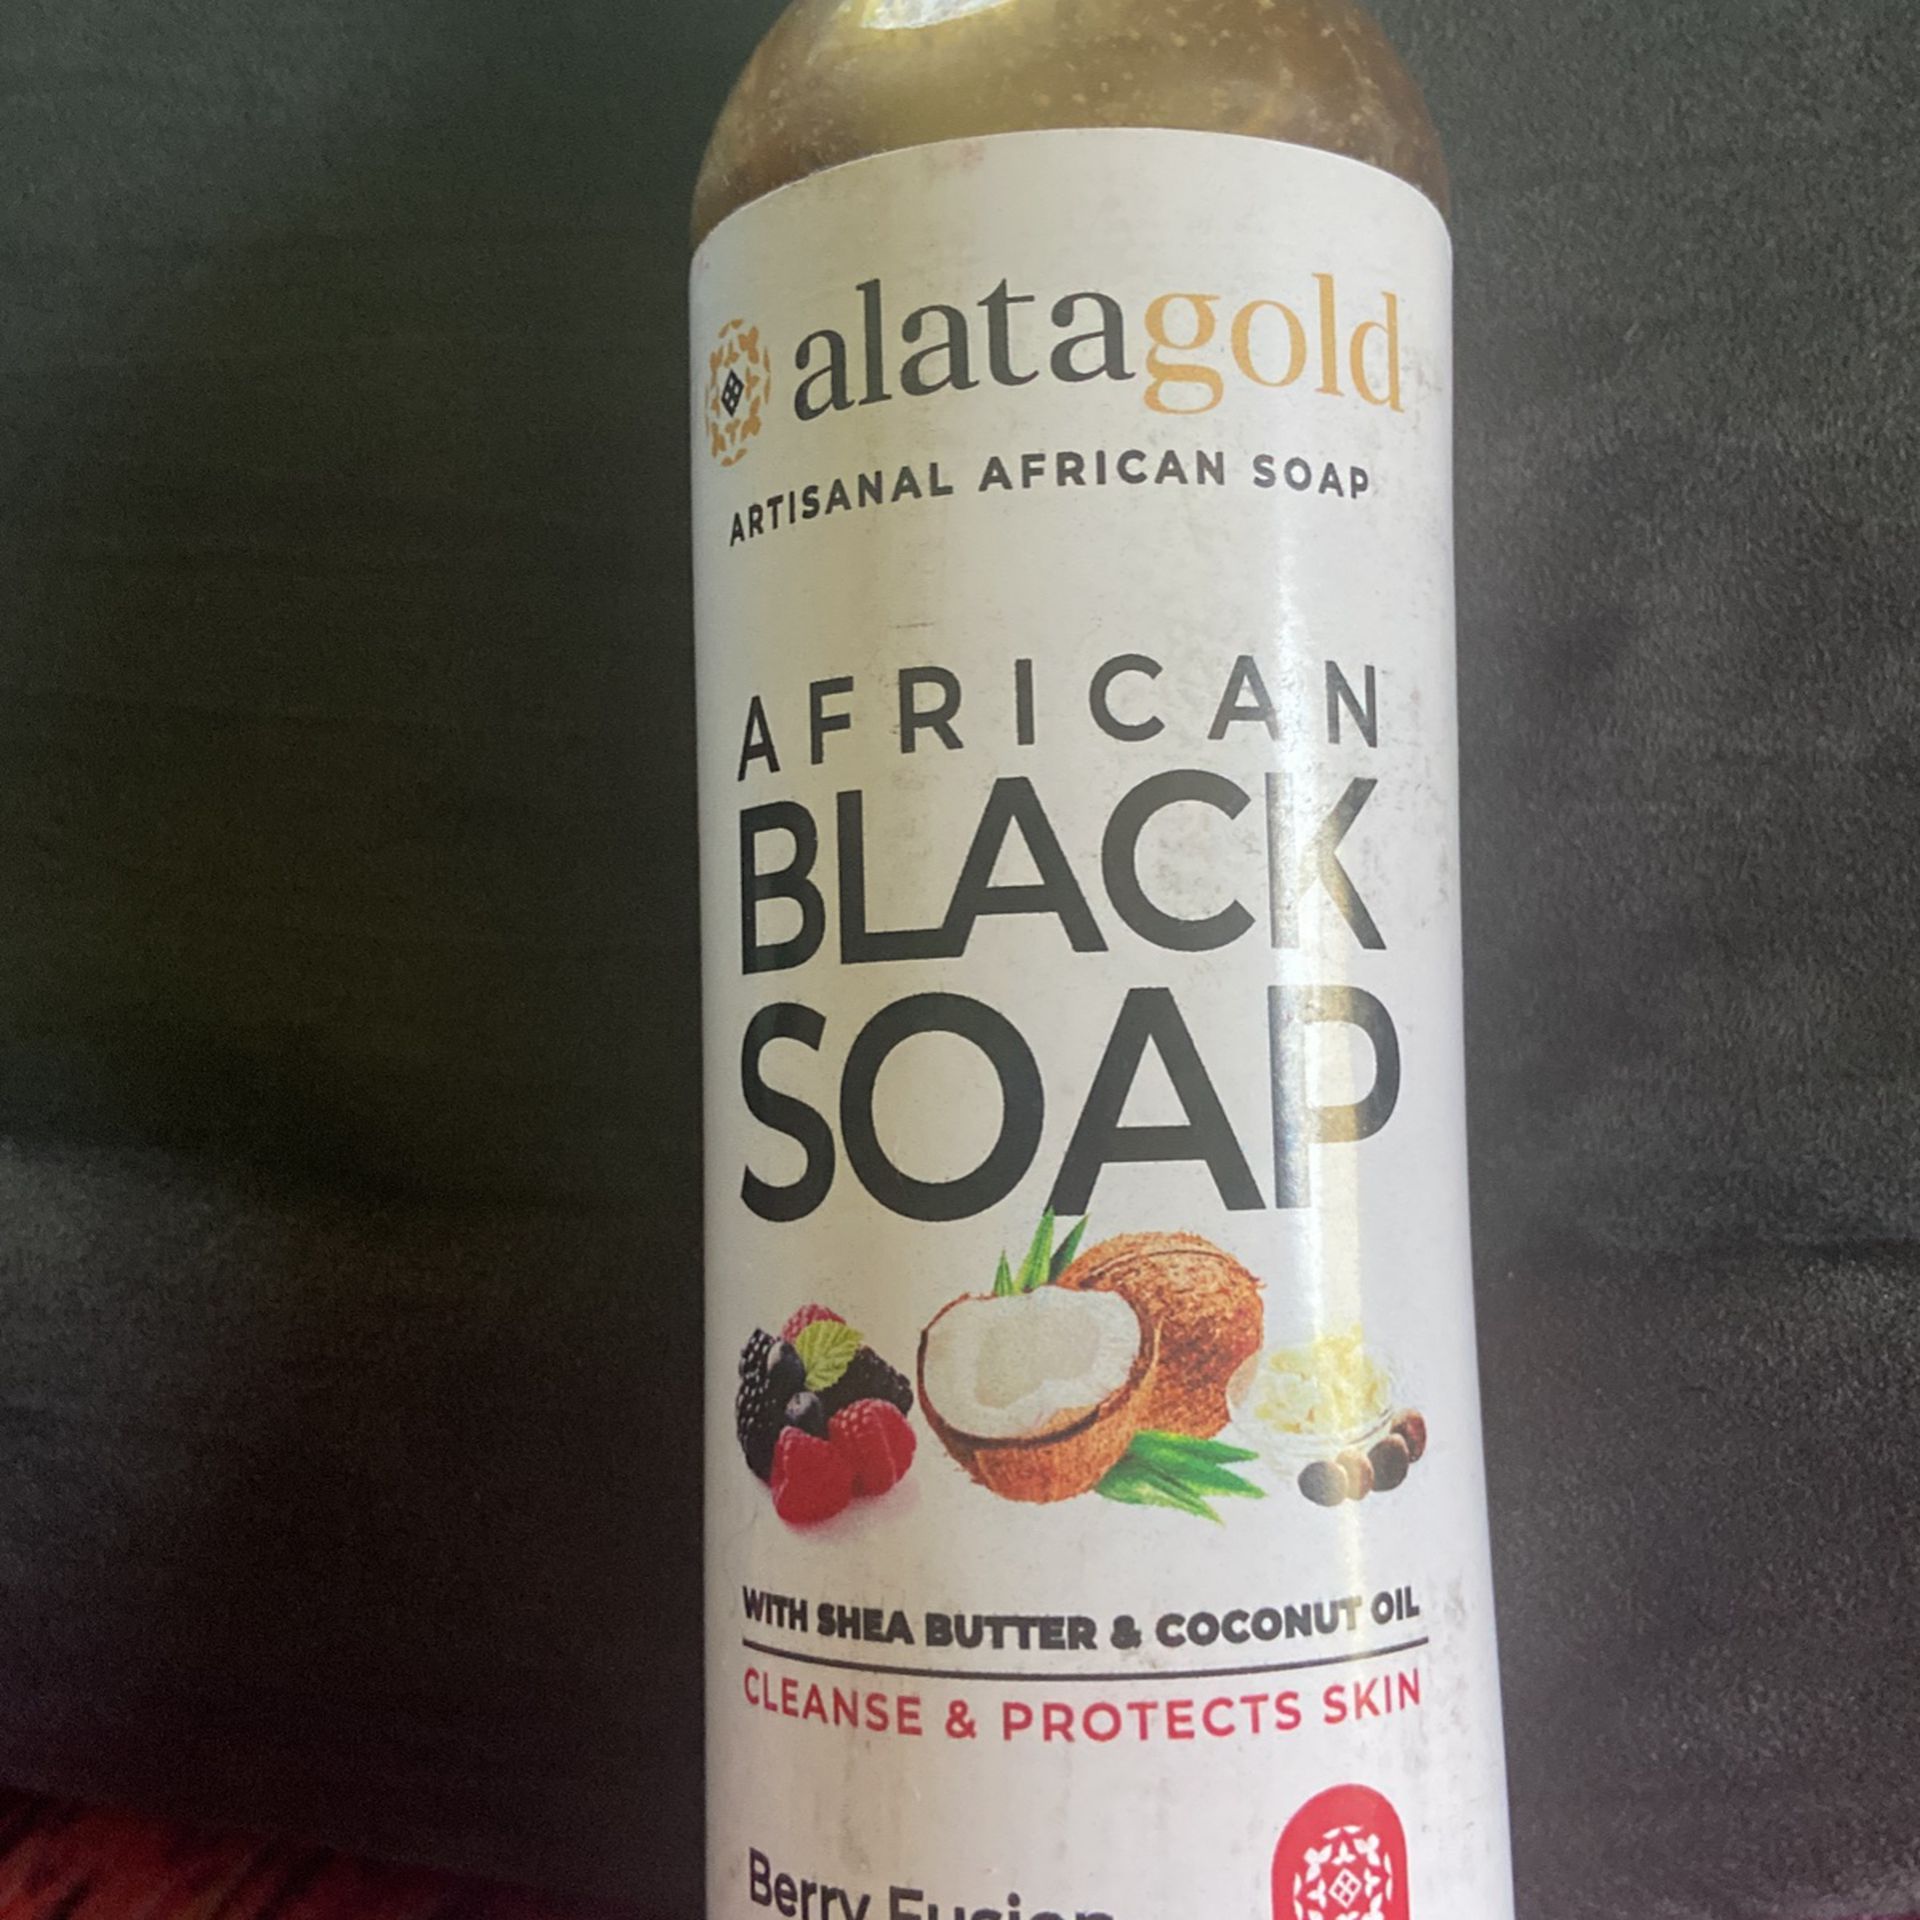 Altagold Artisanal African Black Soap